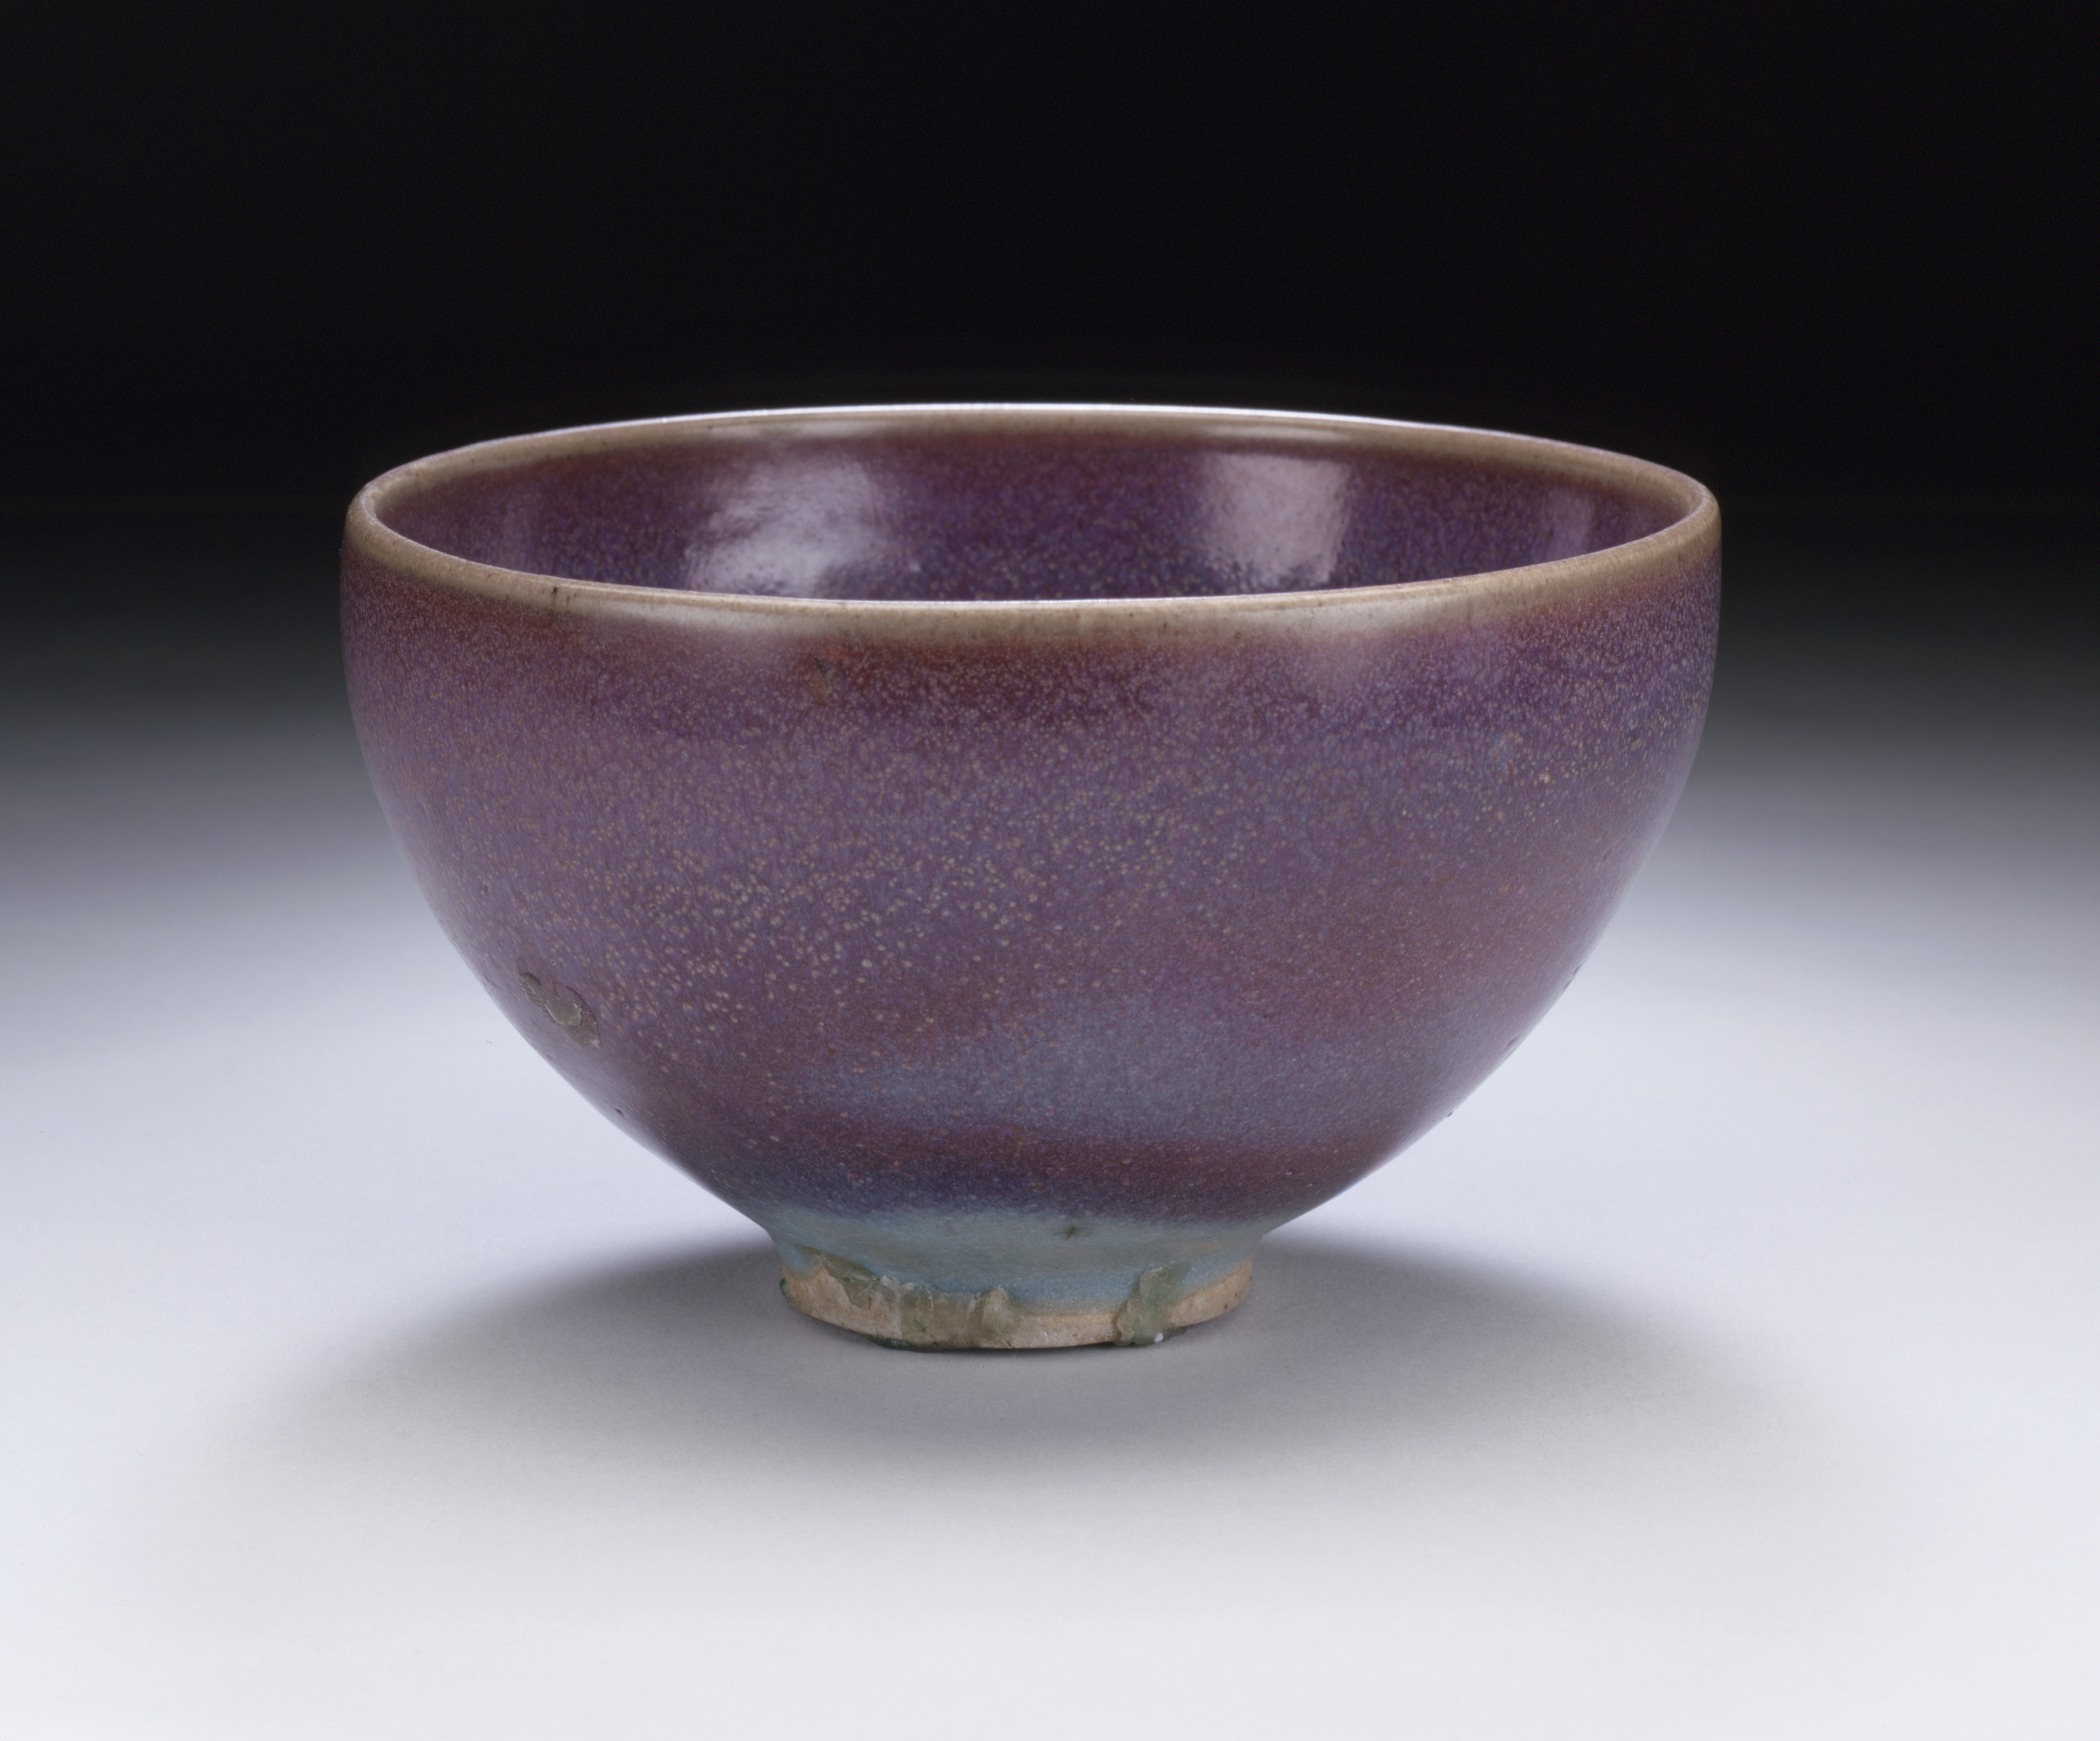 a purple bowl with blue rim against a black background